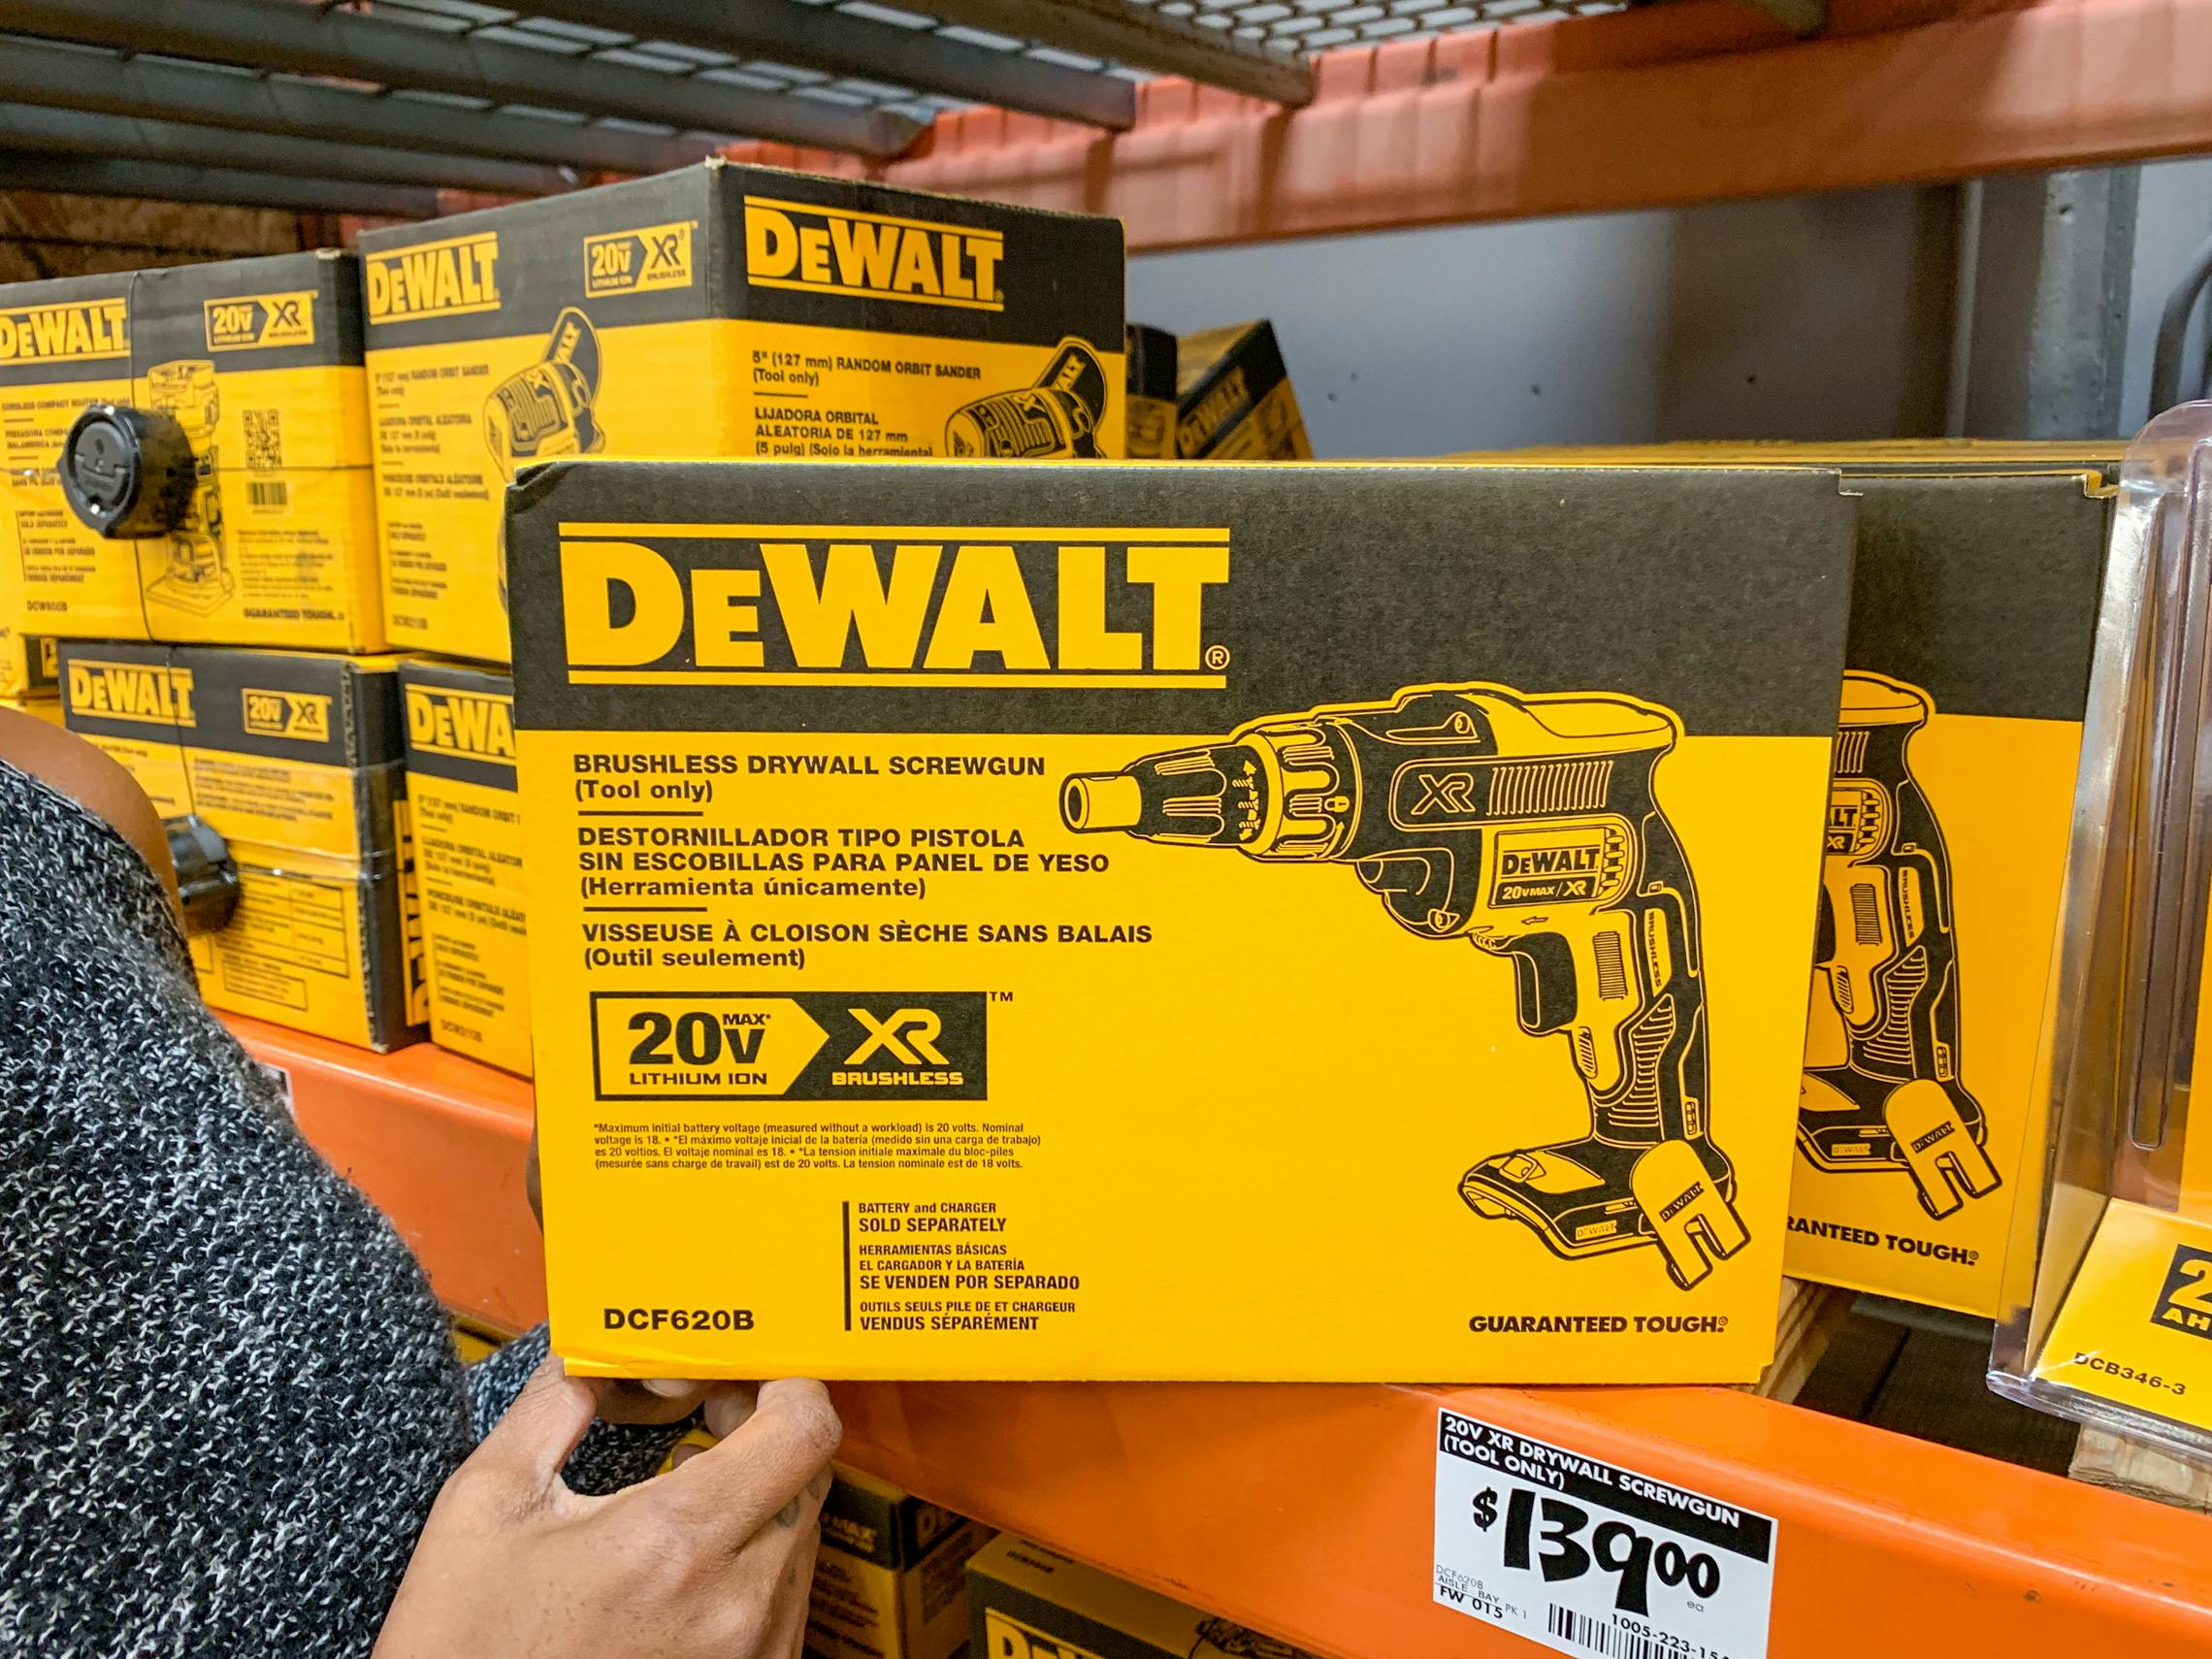 A DeWalt brushless drywall screwgun being held on a Home Depot shelf